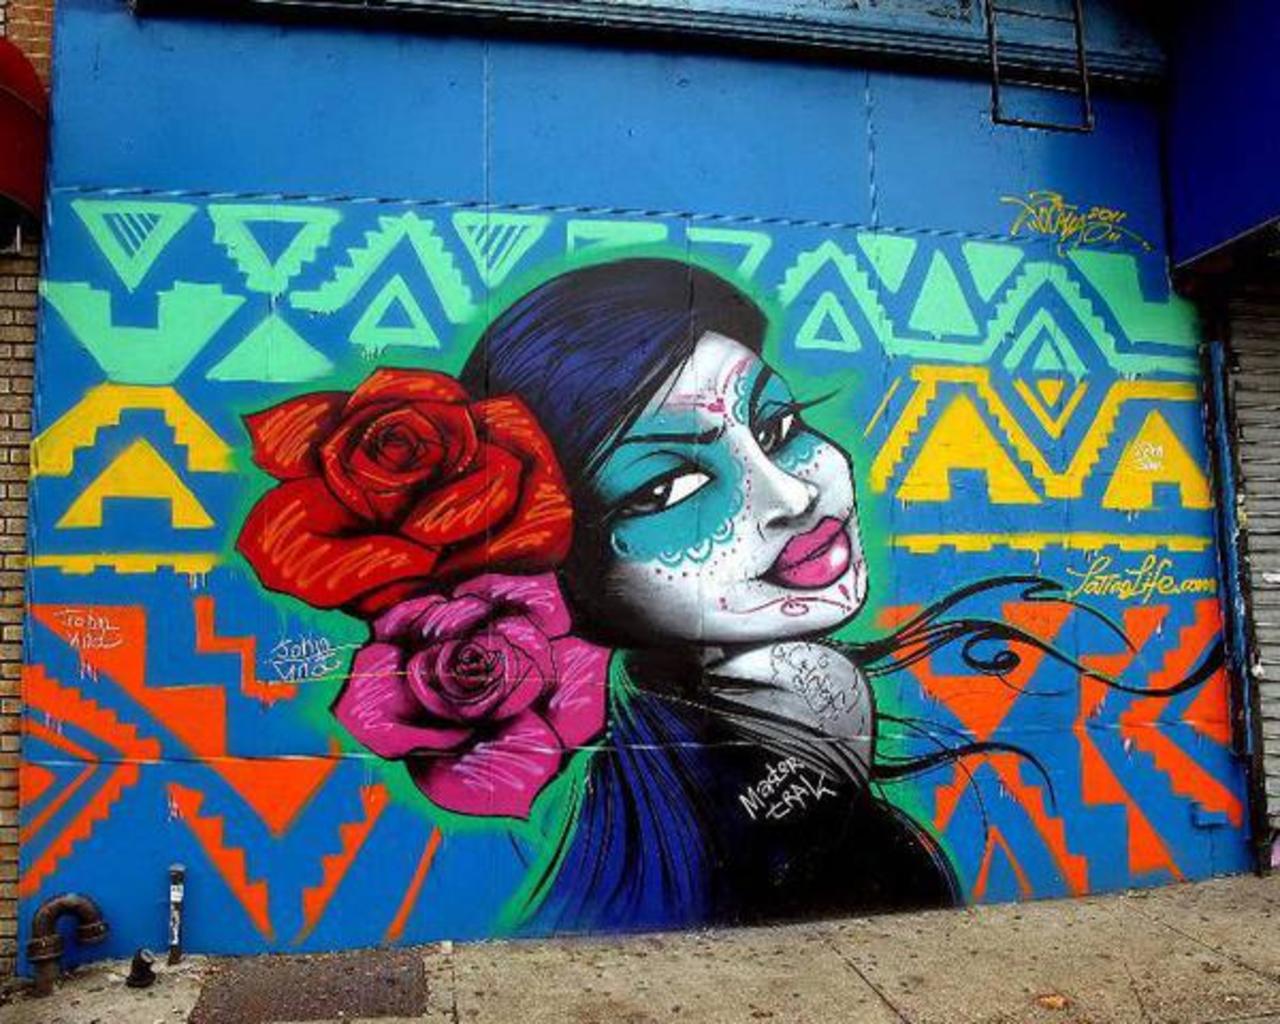 RT @Pitchuskita 
Toofly 
Williamsburg, Brooklyn
#streetart #art #graffiti #mural http://t.co/O1QVqcBDsR